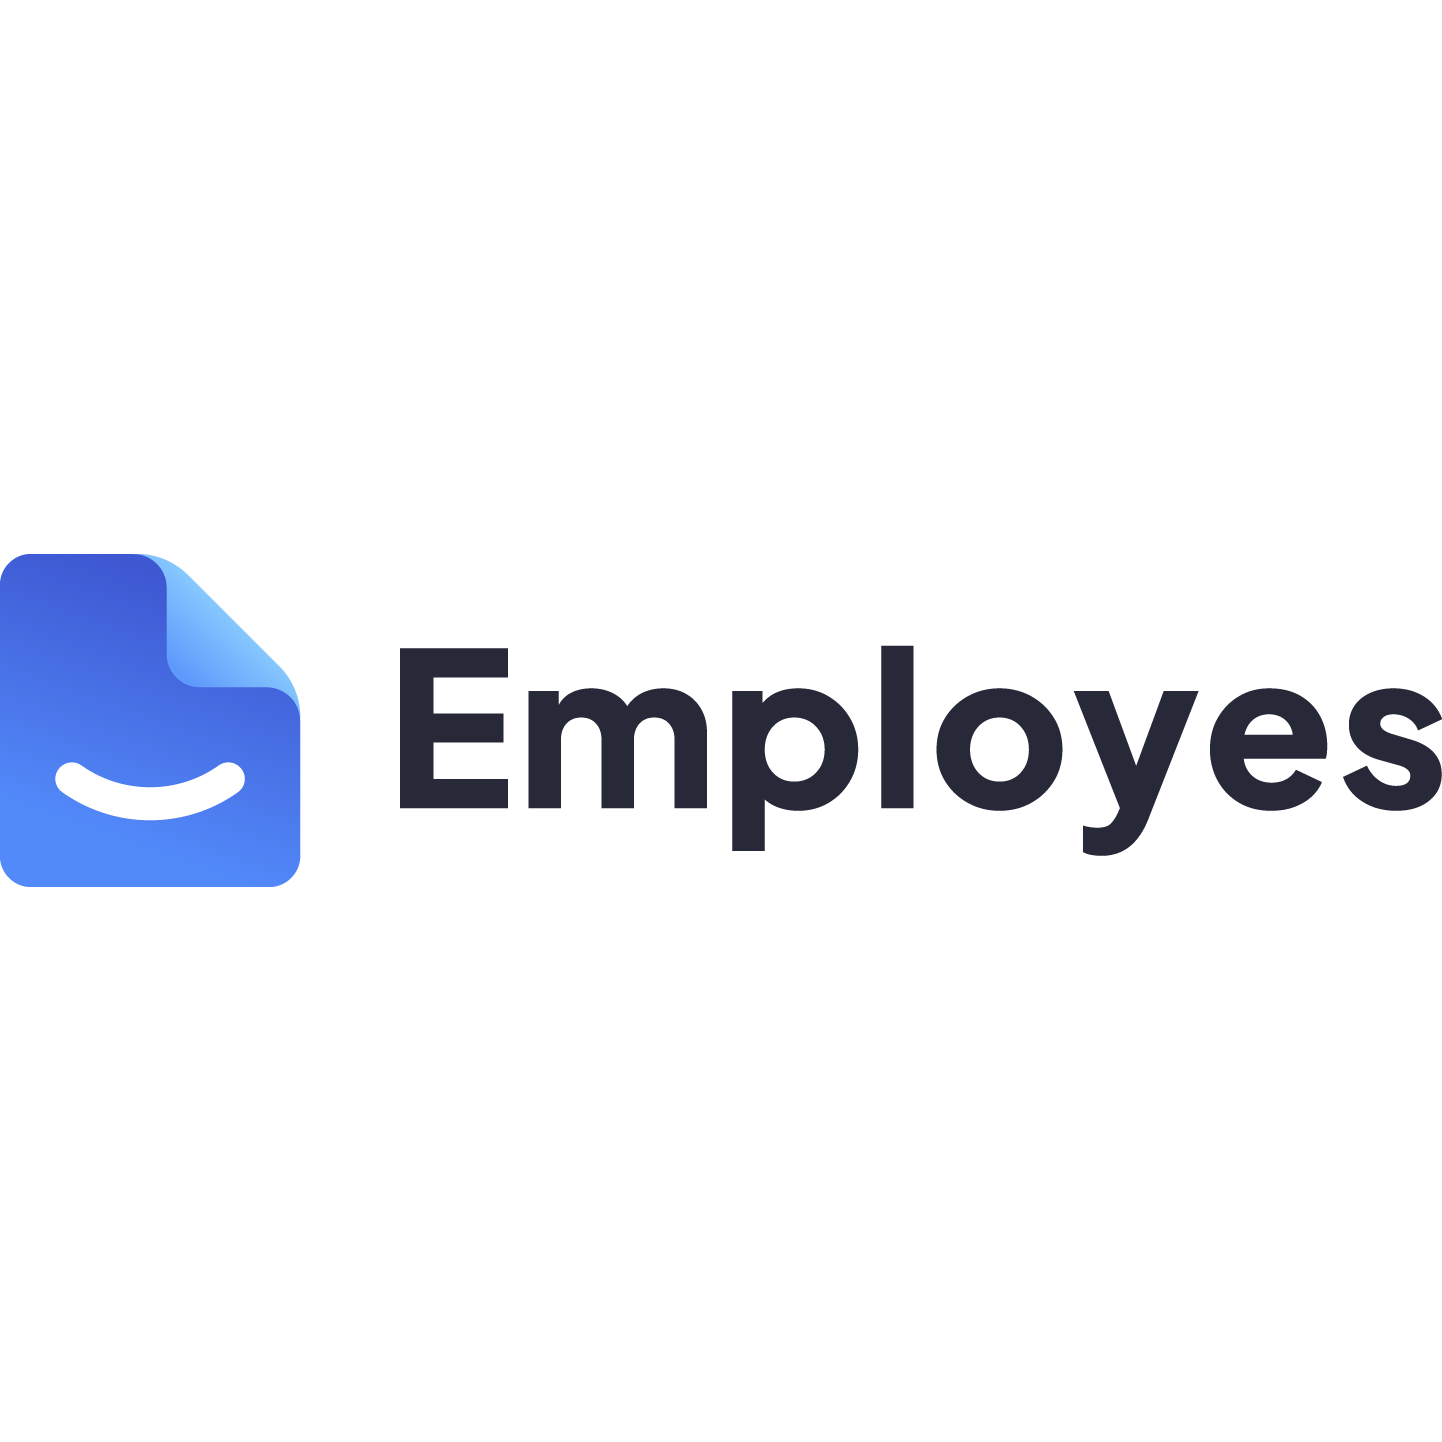 Employes logo